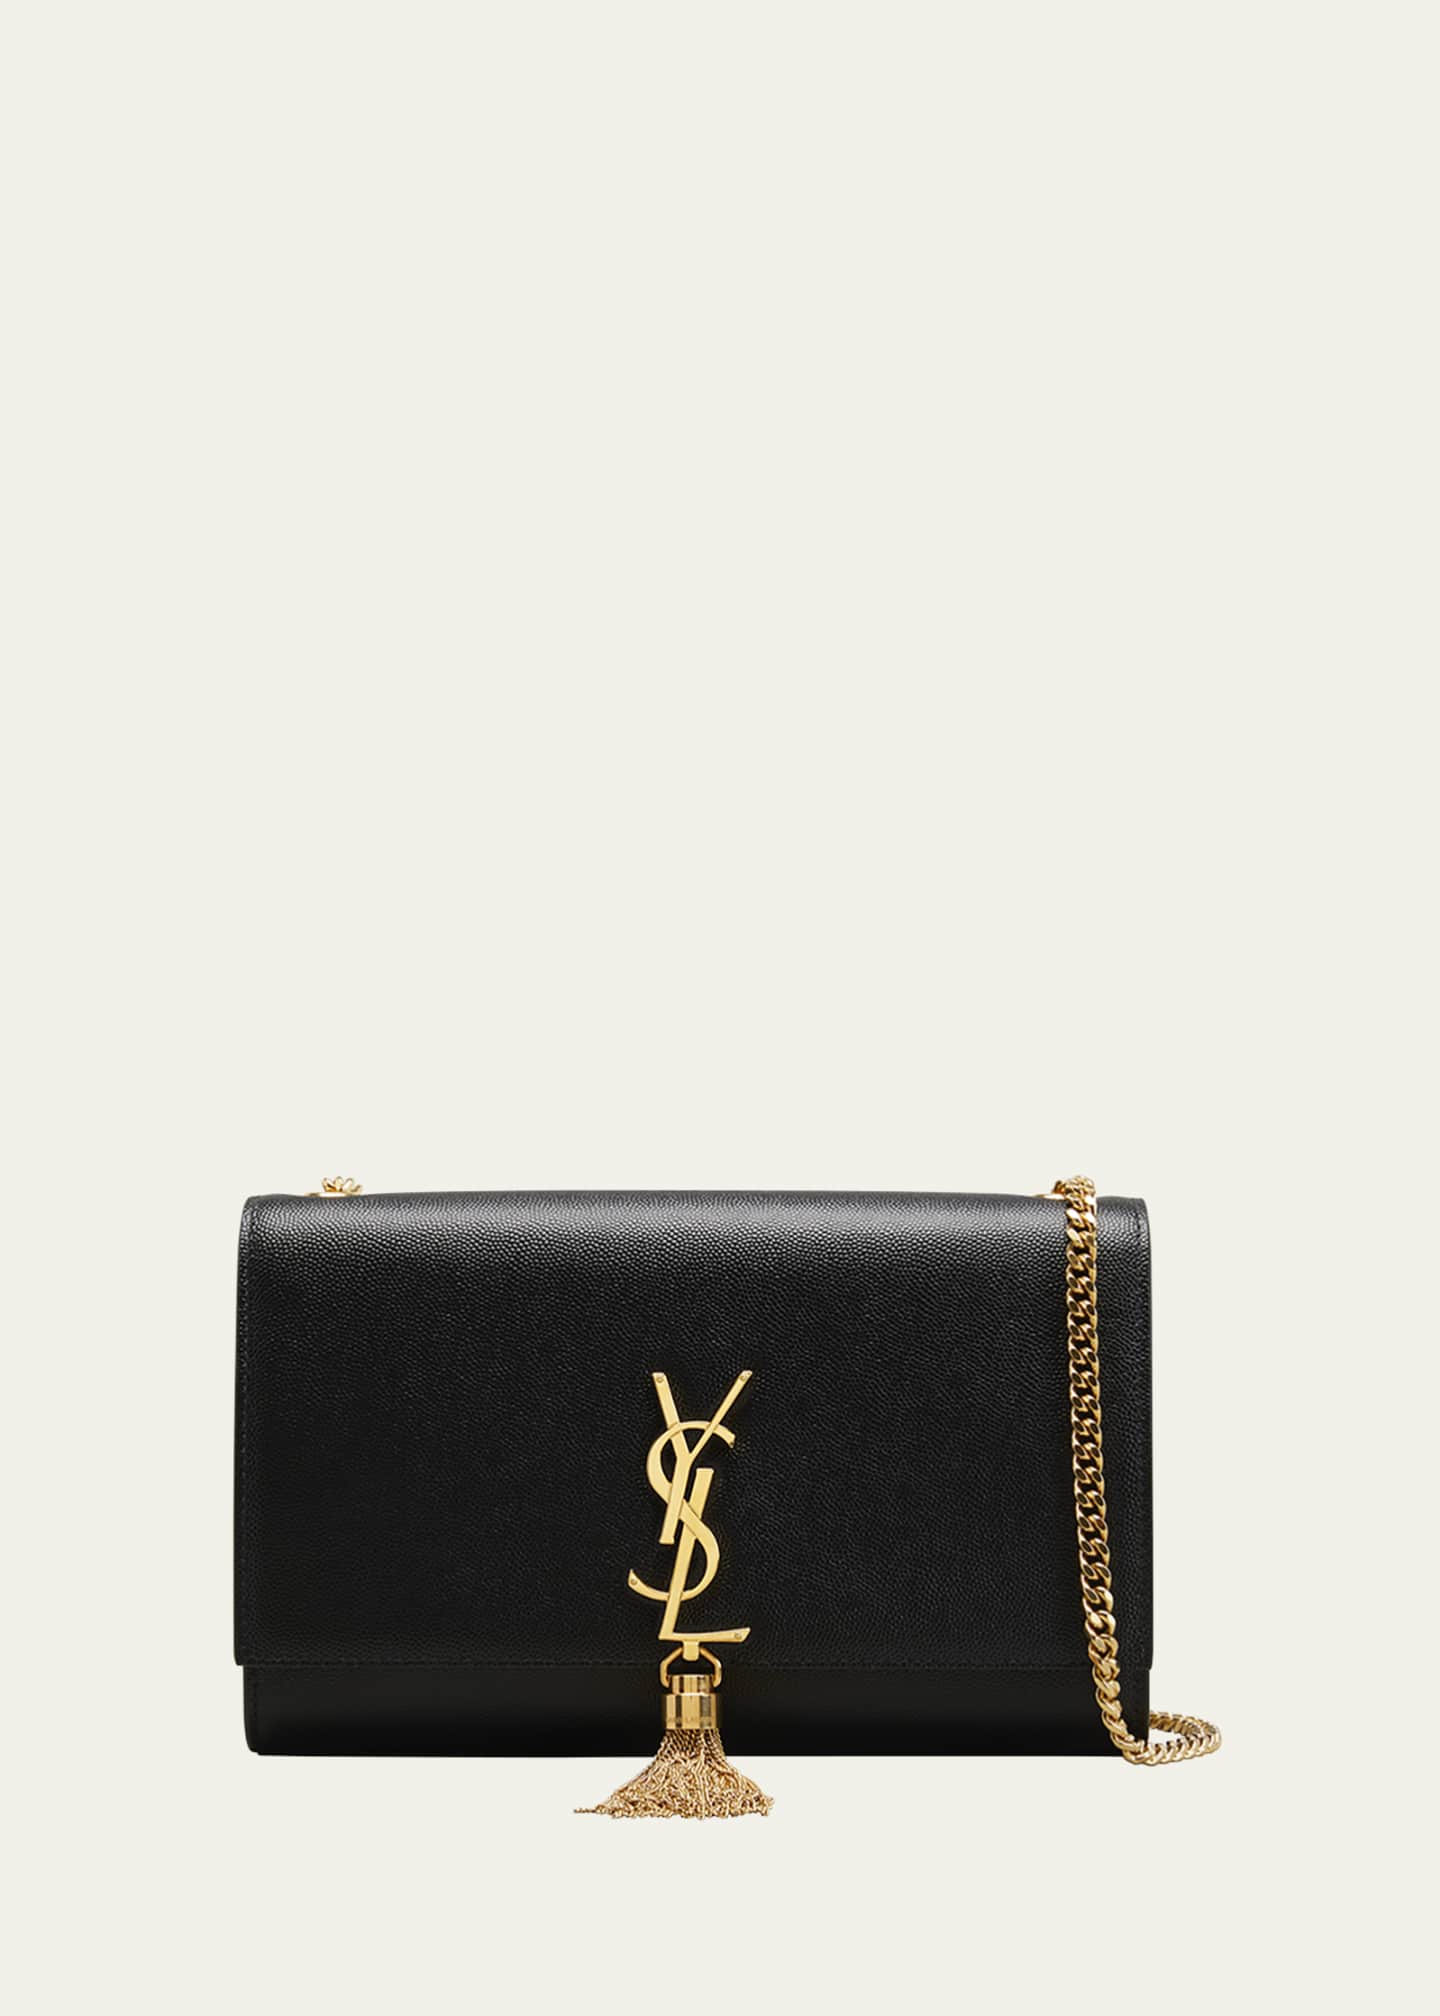 YVES SAINT LAURENT Kate Medium Leather Crossbody Bag Beige-US